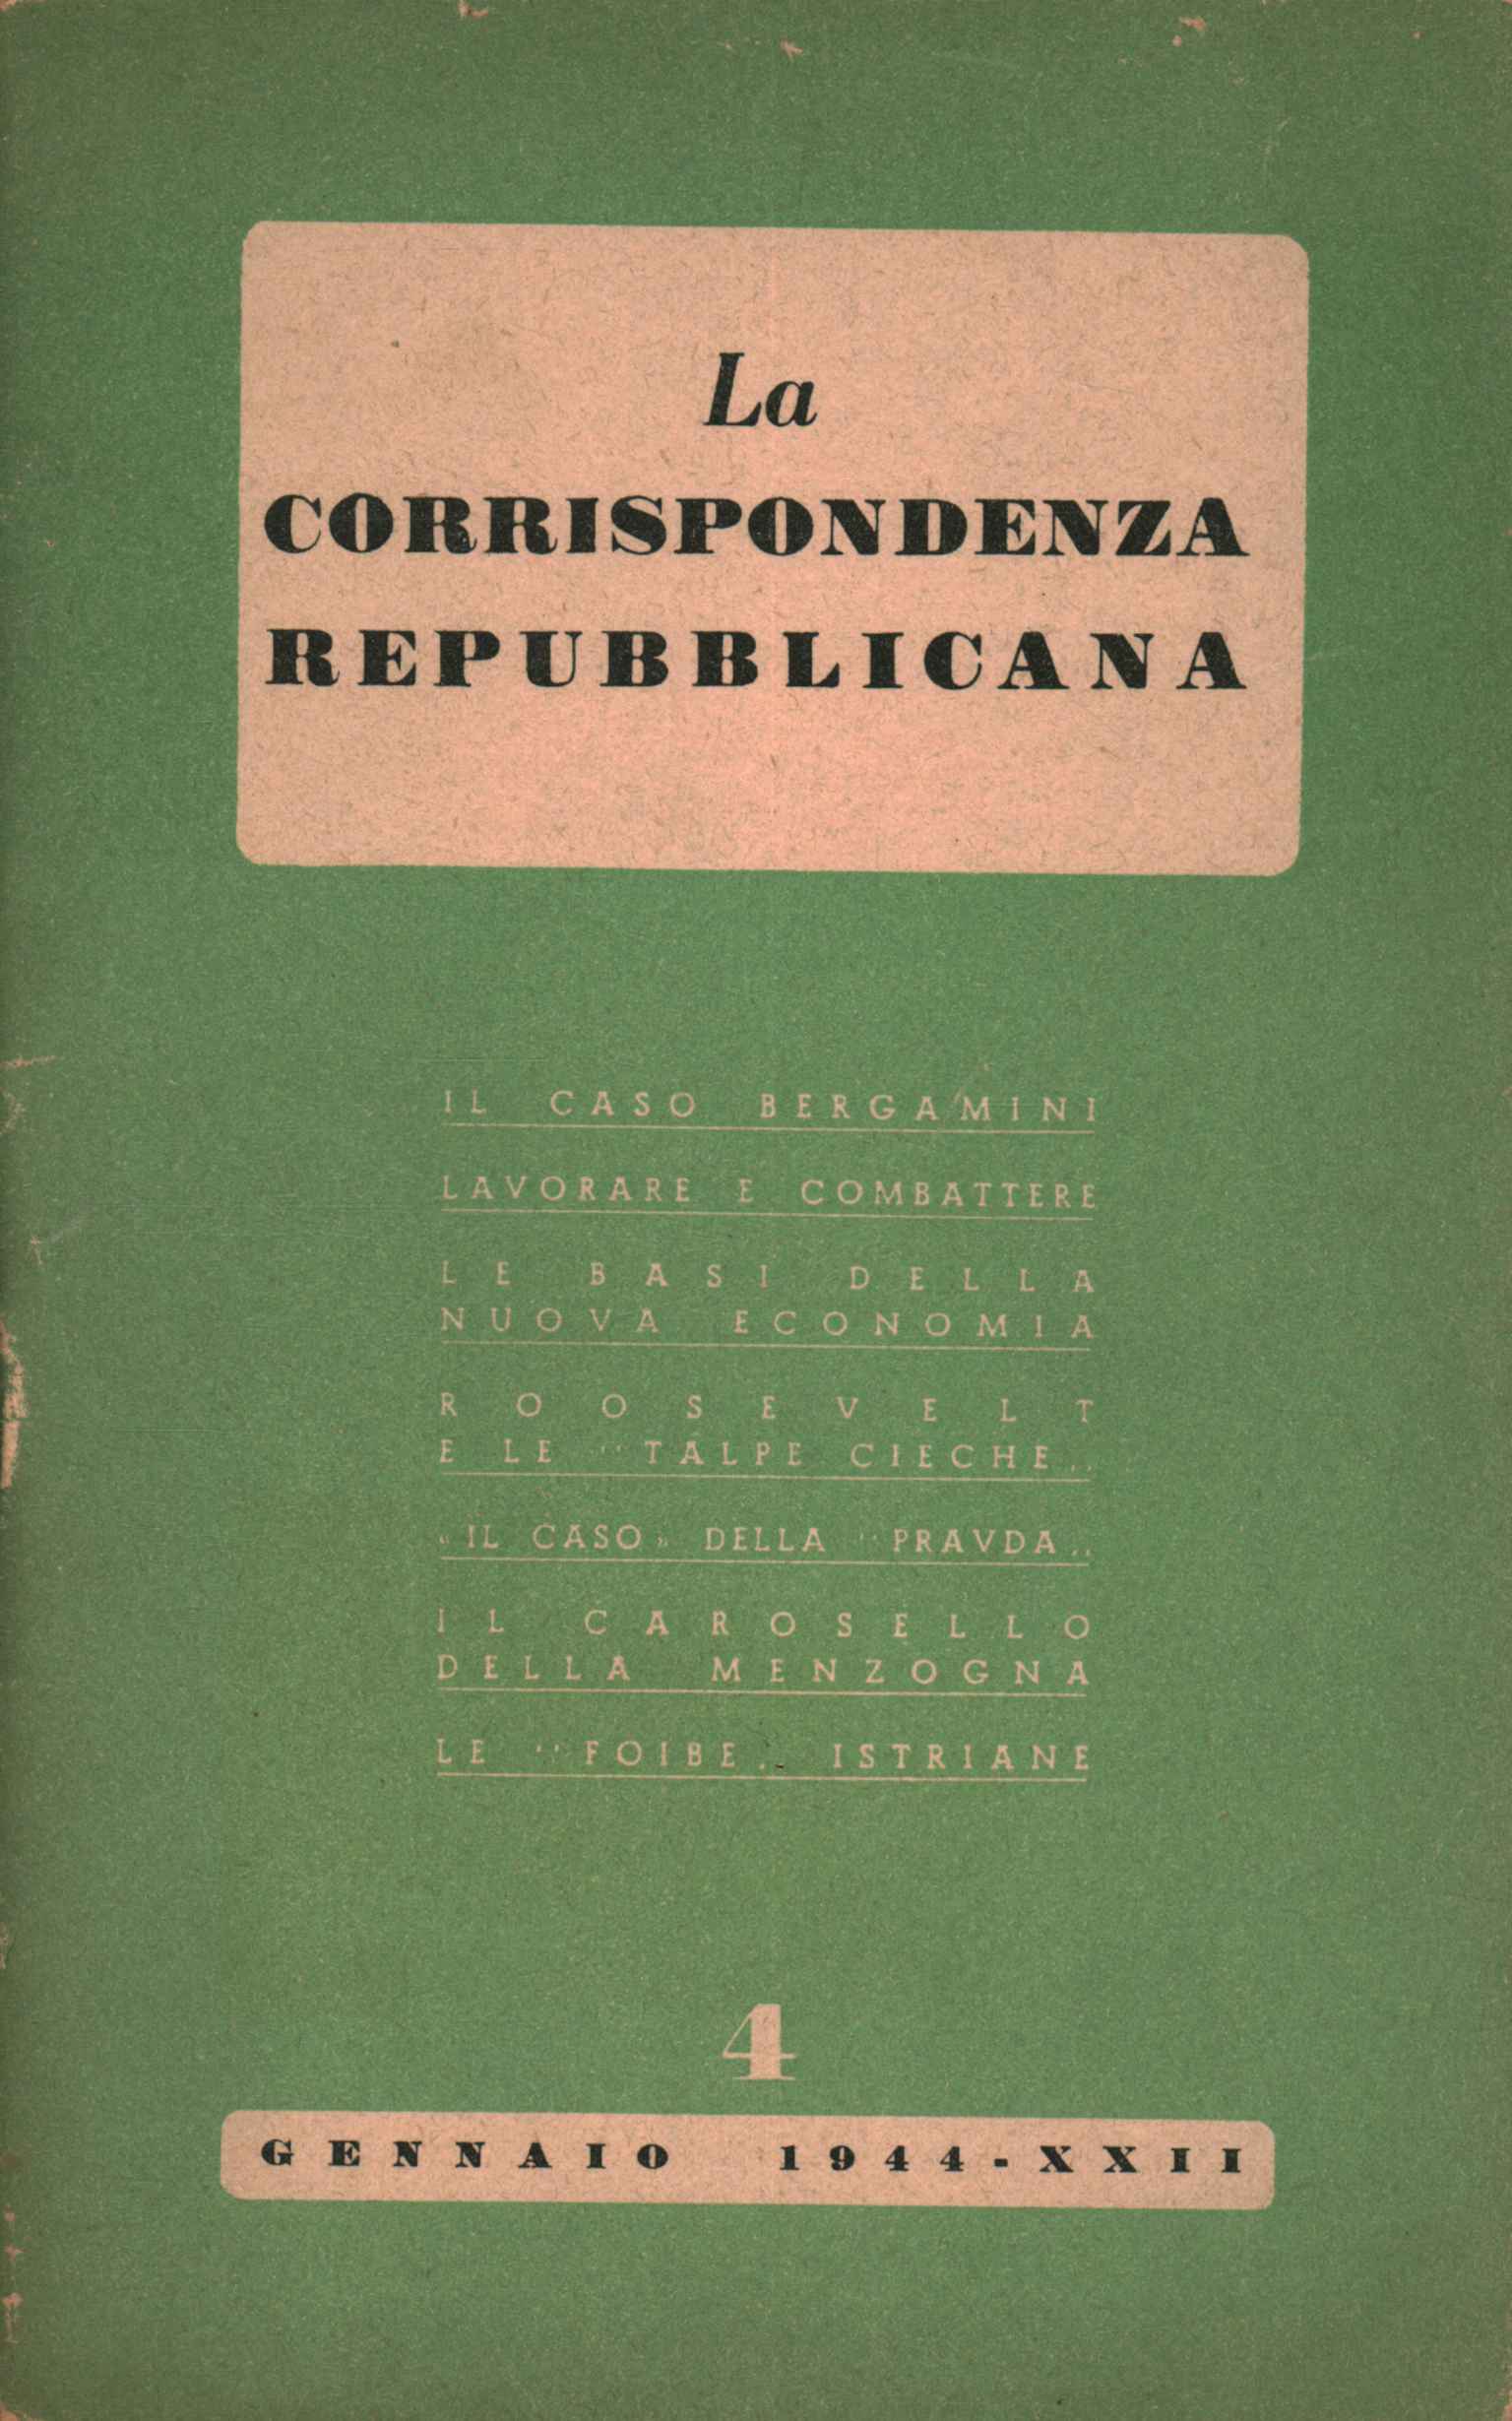 Republikanische Korrespondenz (1944-XII),Republikanische Korrespondenz (1944-XXII)%2,Republikanische Korrespondenz (1944-XXII)%2,Republikanische Korrespondenz (1944-XXII)%2